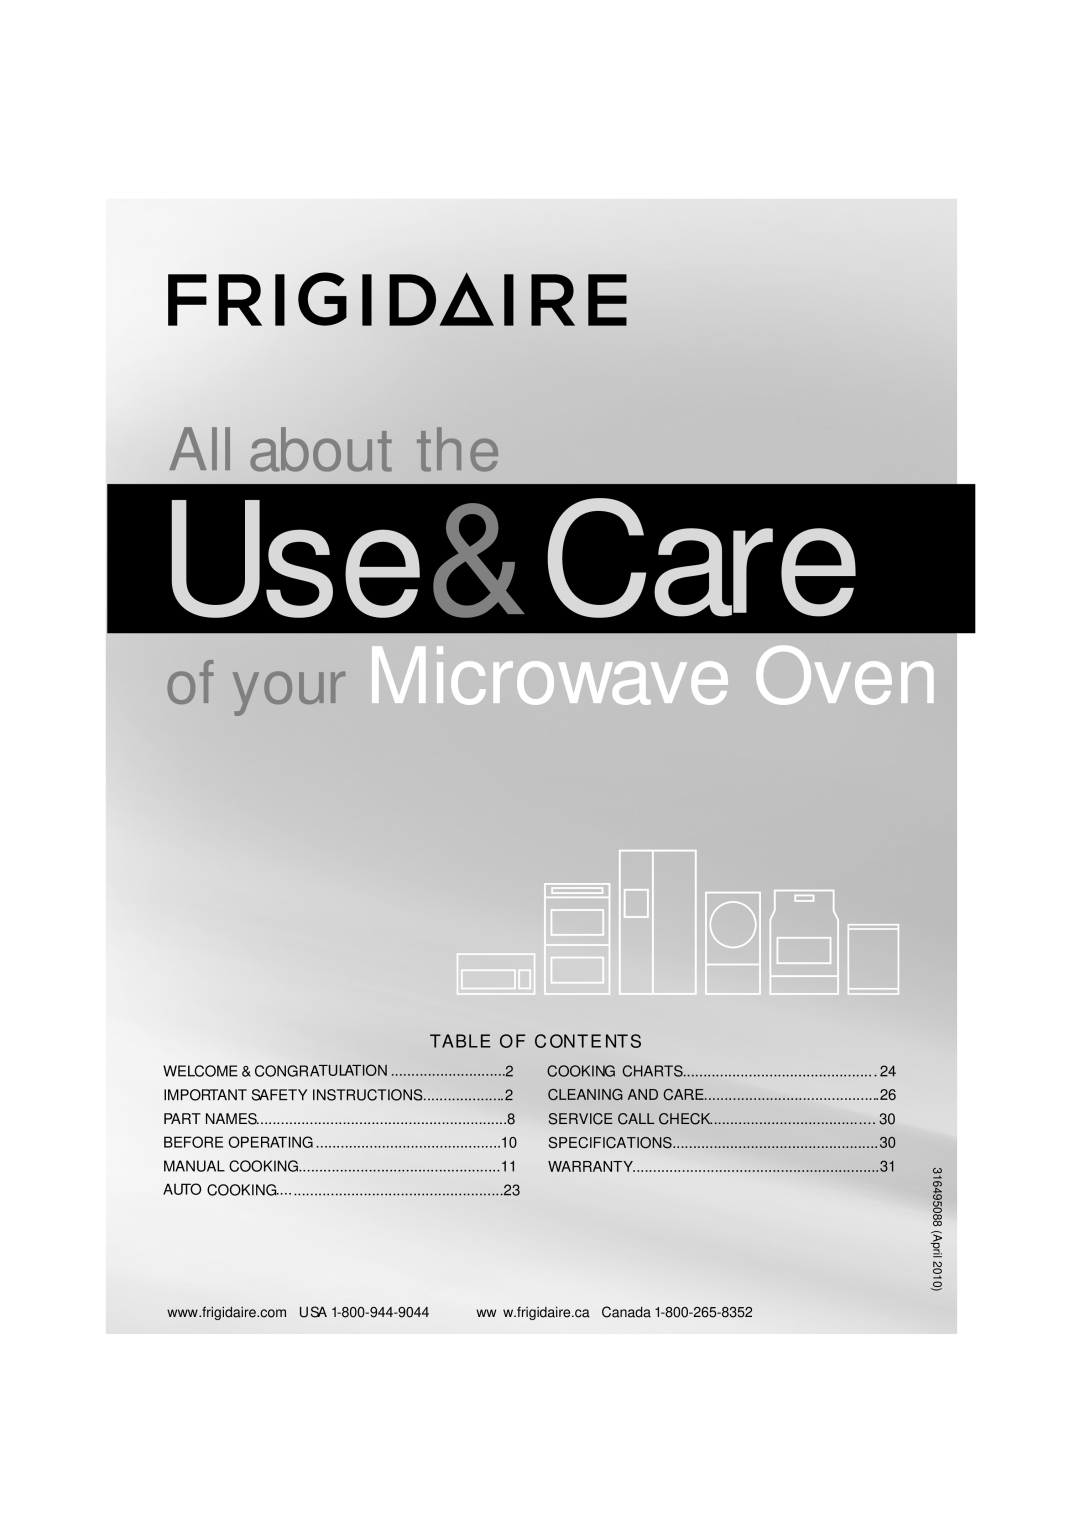 Frigidaire FFMV154CLS dimensions MicrowaveDrop-InCooktop, FFMV154CLPEC3085K S, Signature Features, Bake & Microwave Option 